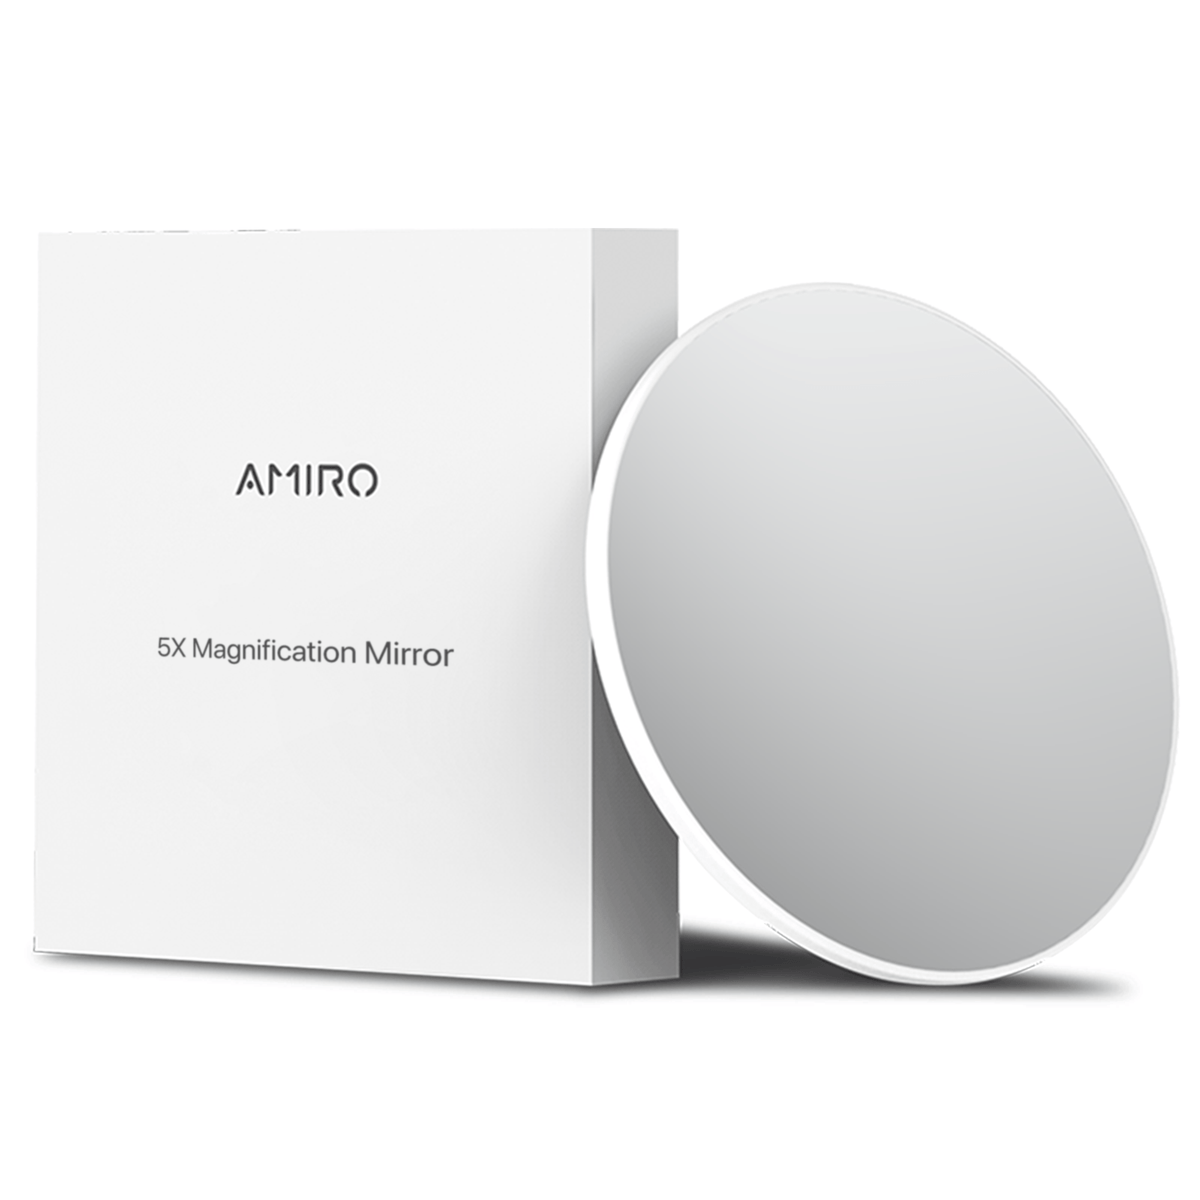 AMIRO 5X Magnification Mirror